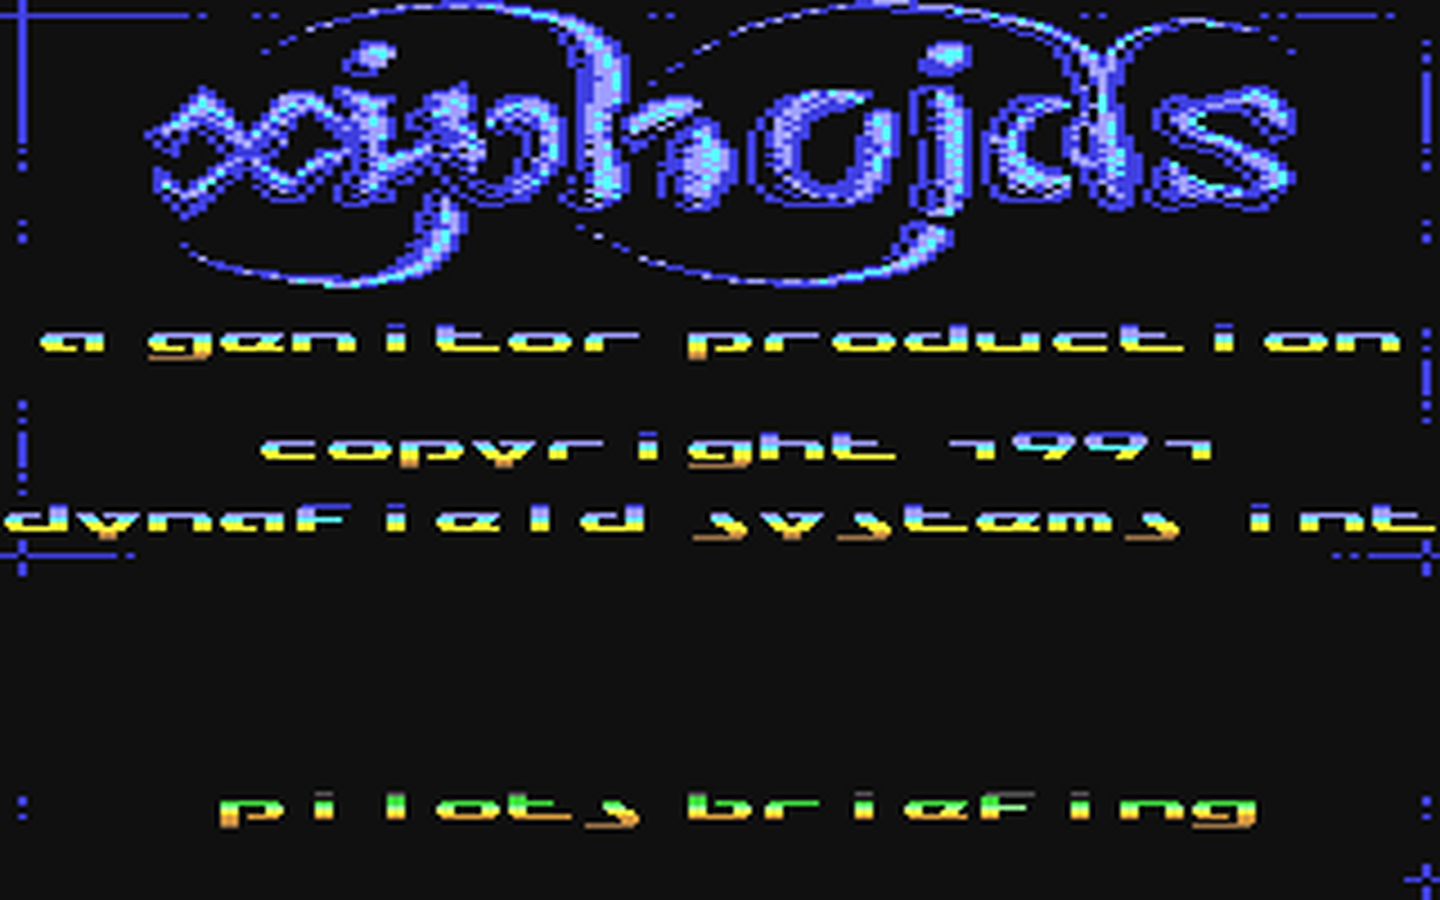 C64 GameBase Xiphoids CP_Verlag/Magic_Disk_64 1992